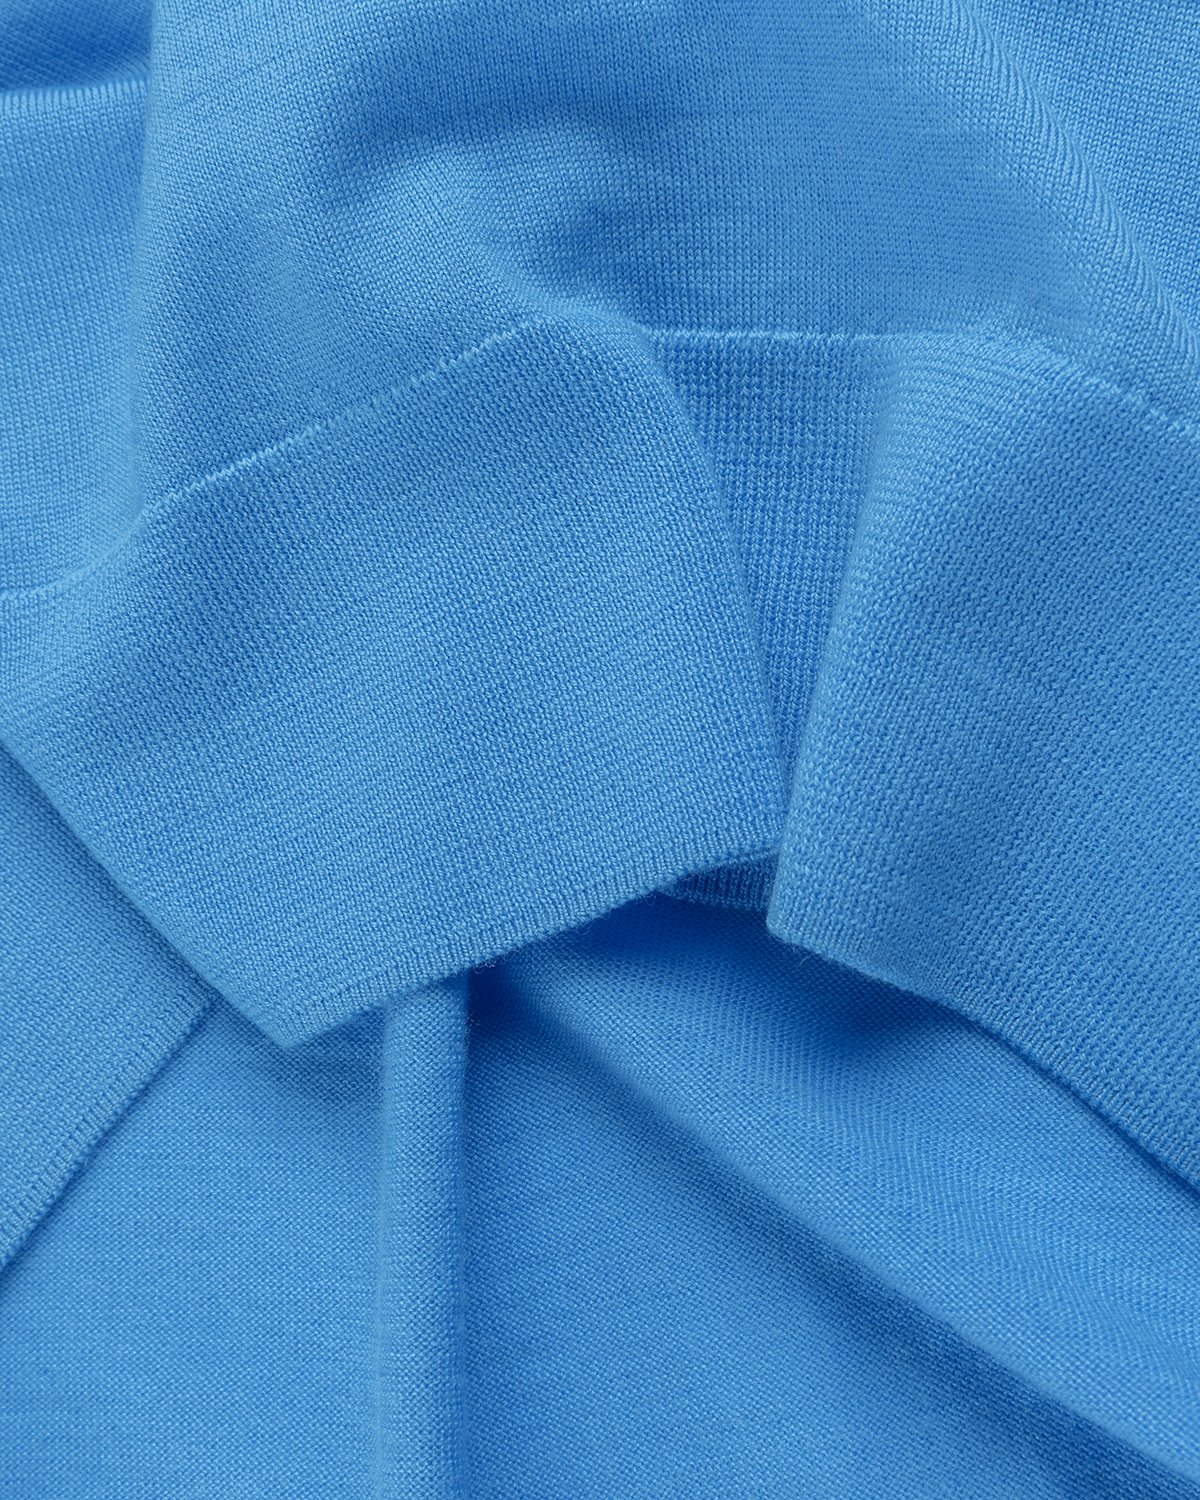 Dries van Noten - Merino Sleeveless Sweater Madonna - Clothing - Blue - Image 5